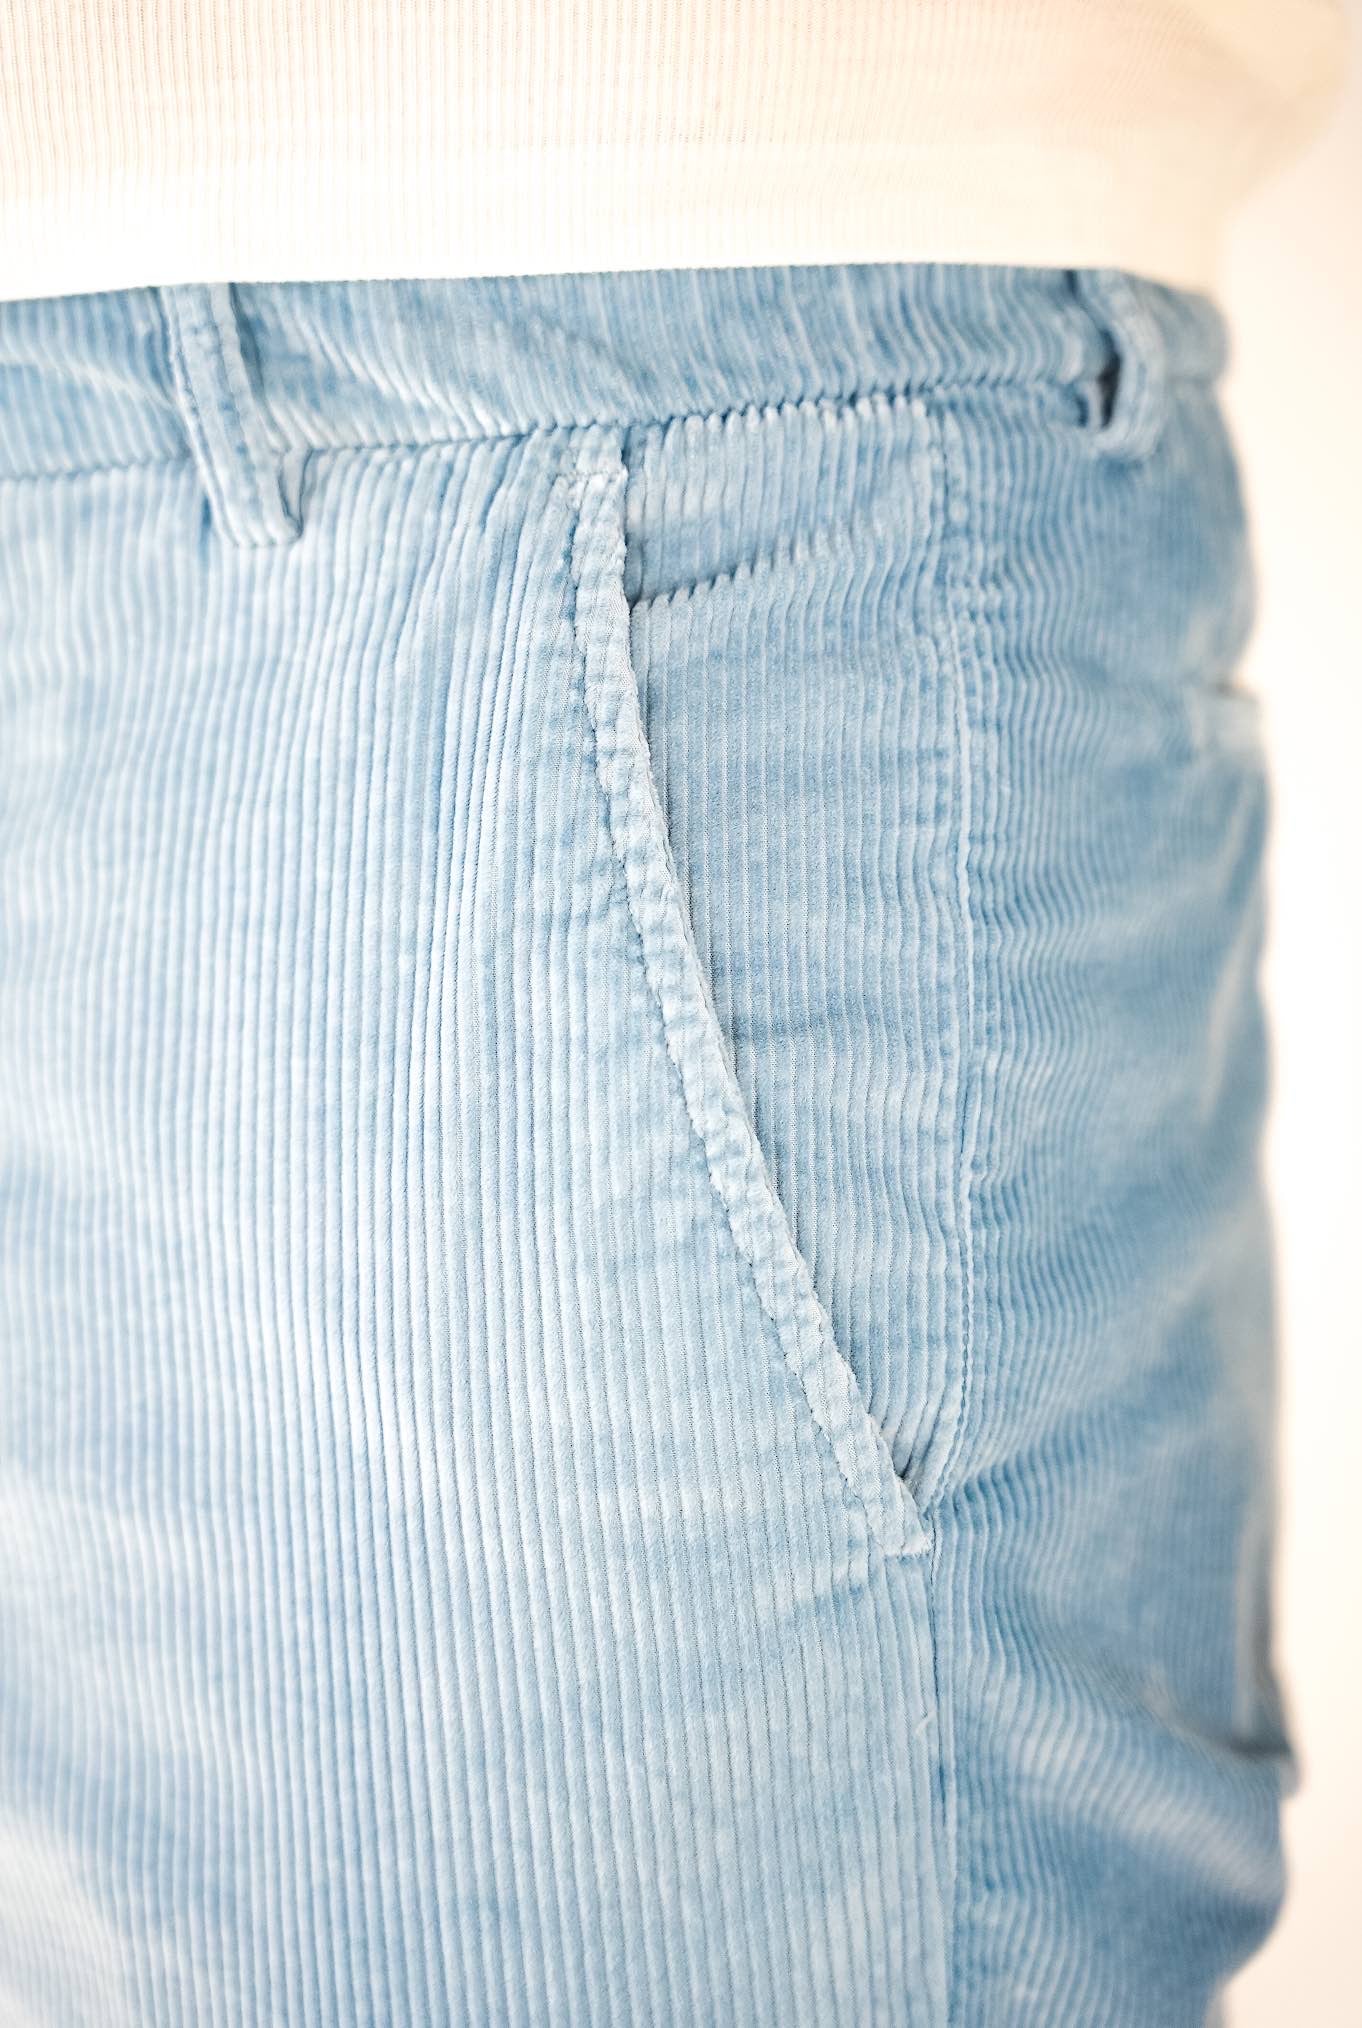 MARCO PESCAROLO Velvet Trousers with Light Blue Drawstring